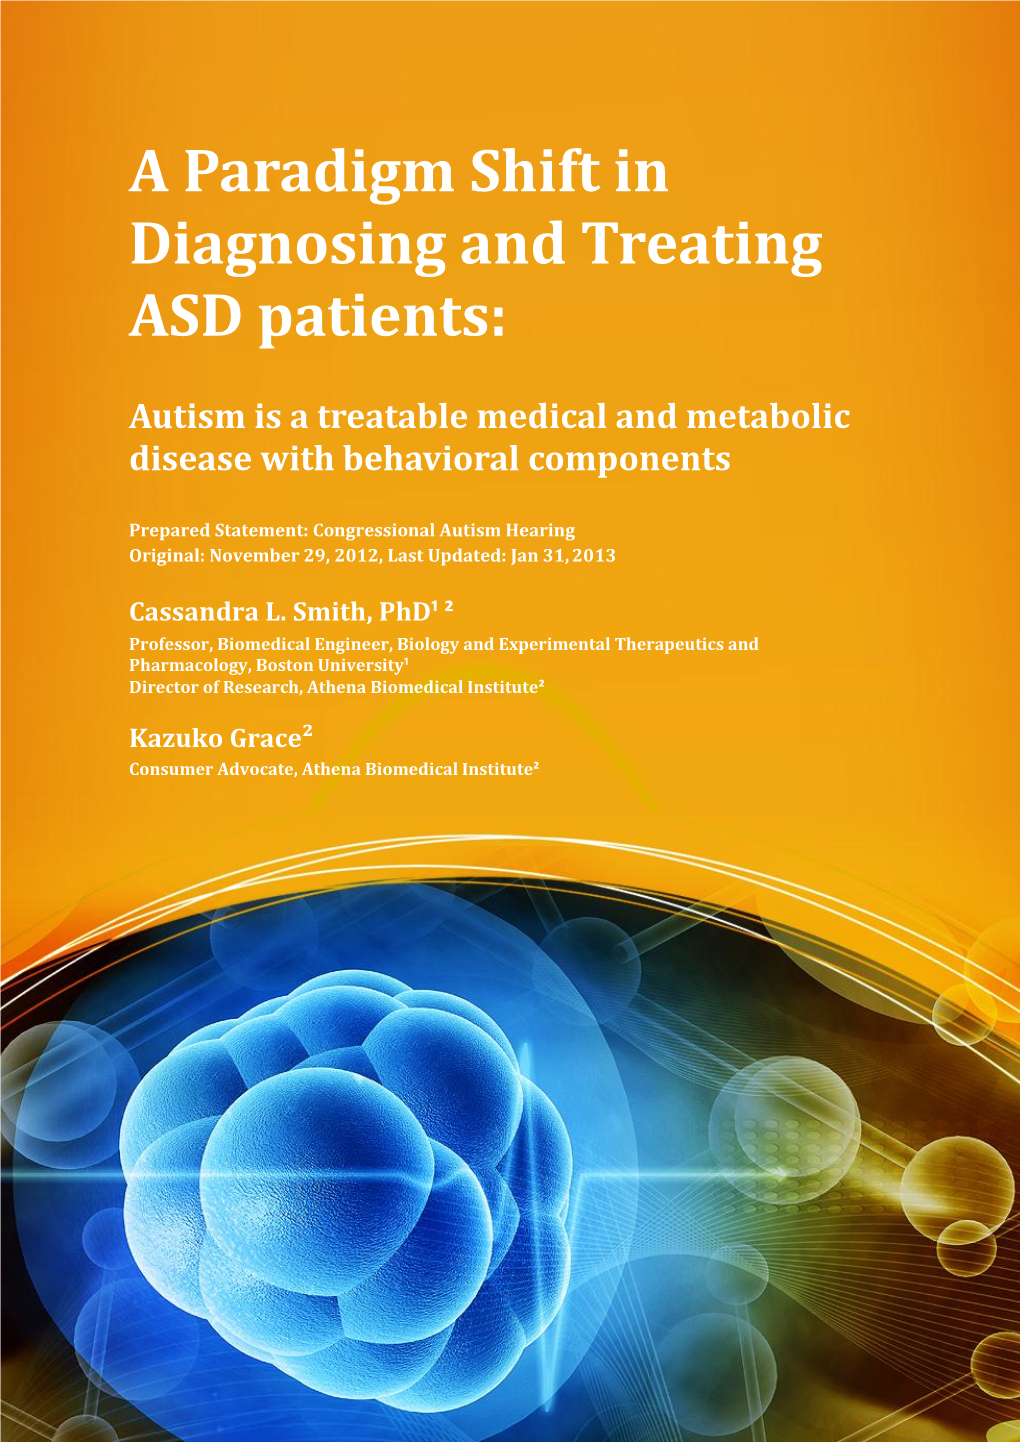 A Paradigm Shift in Diagnosing and Treating ASD Patients